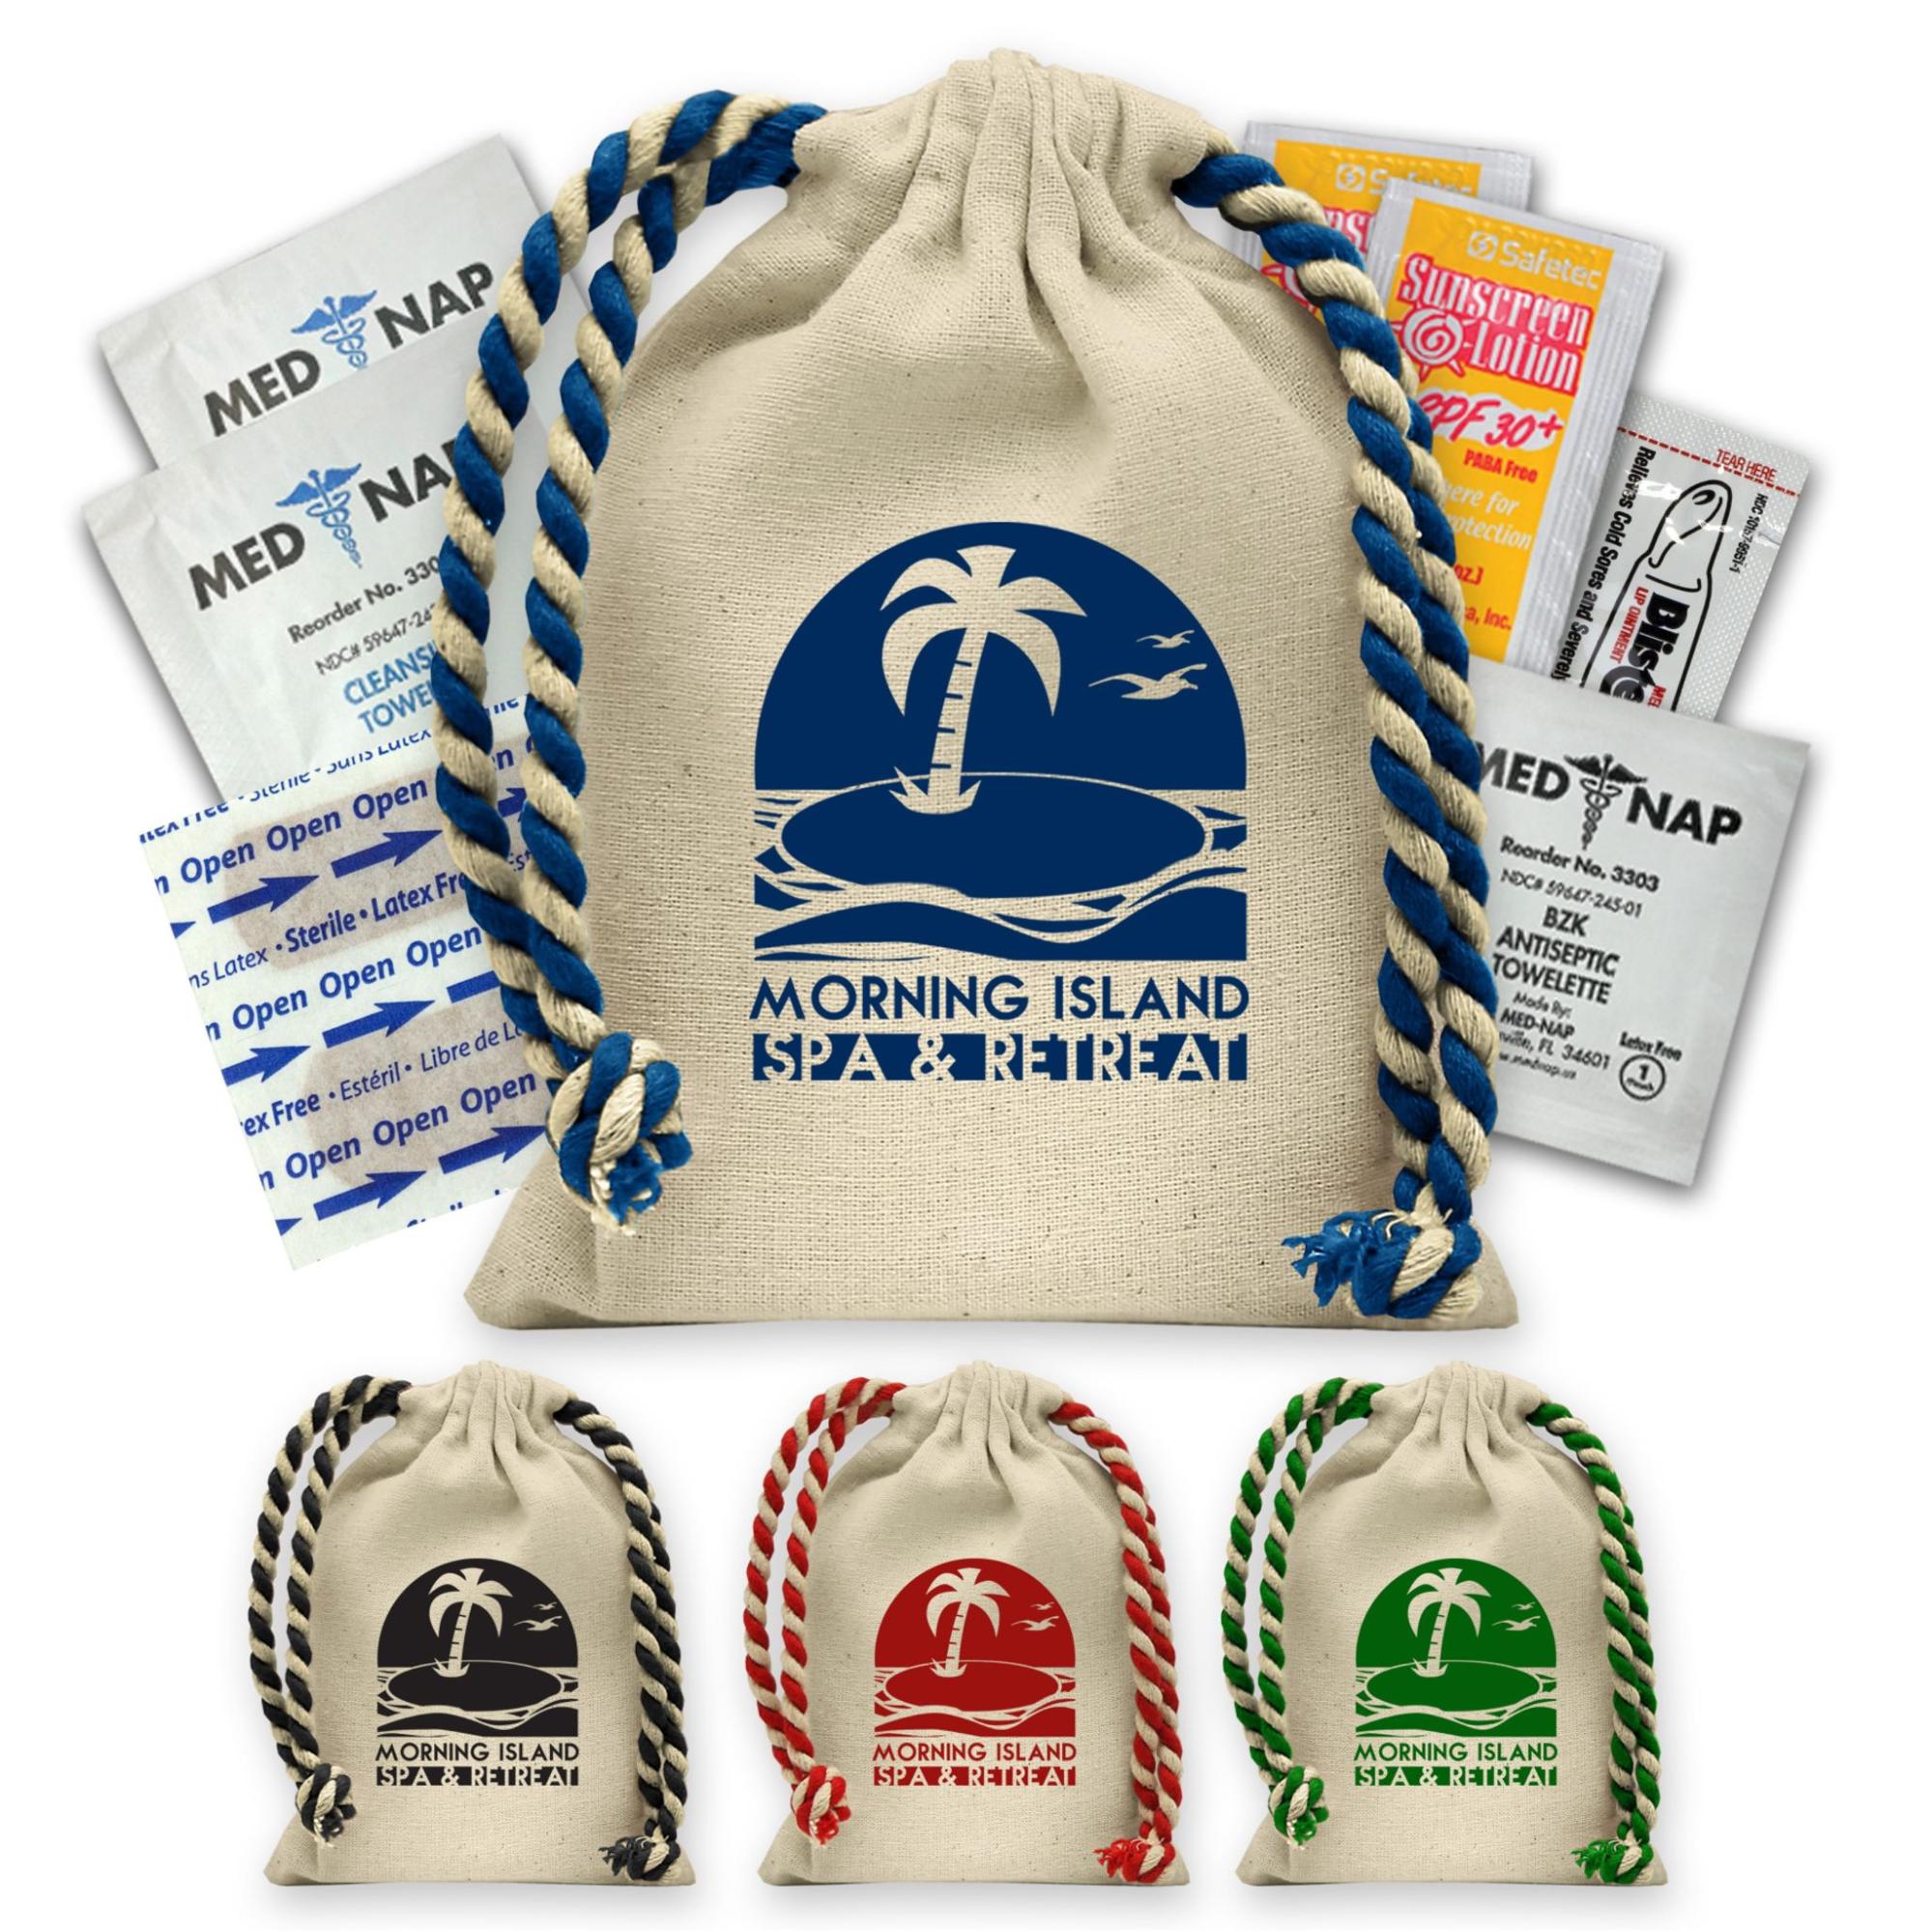 Promotional Sunscreen Kit